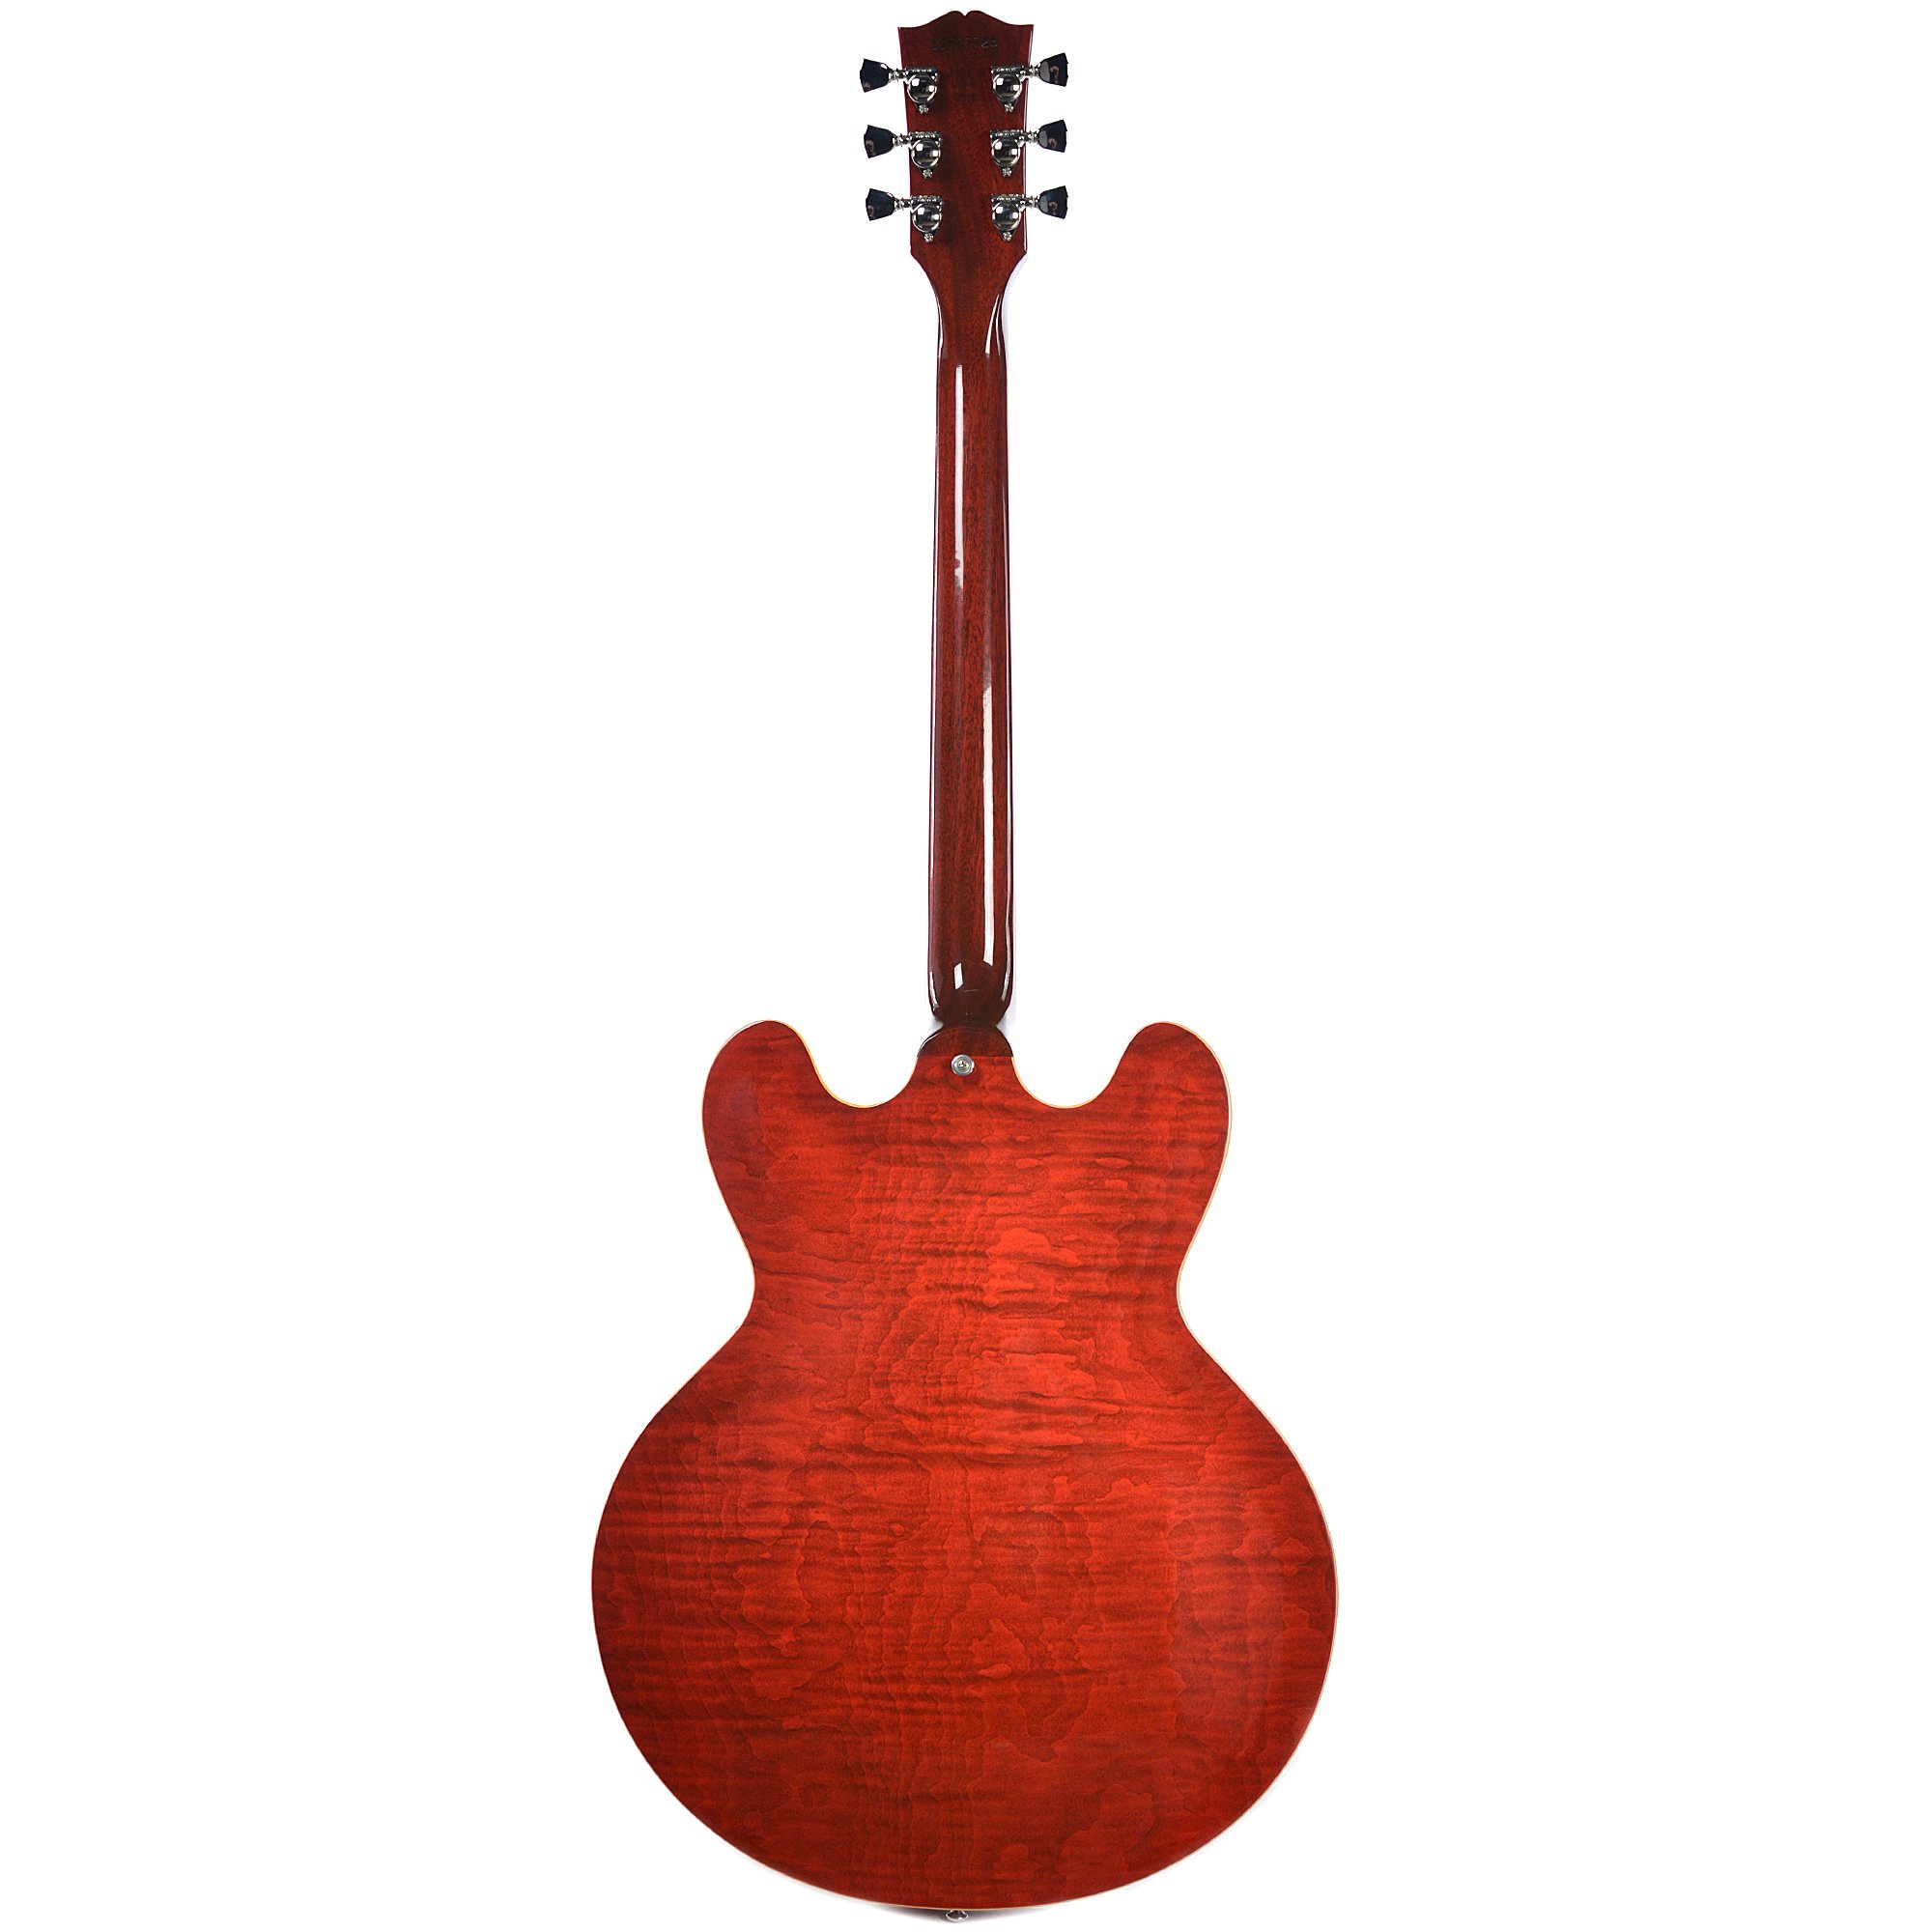 Gibson Es-335 Figured 2018 Ltd - Antique Sixties Cherry - Semi-hollow electric guitar - Variation 1